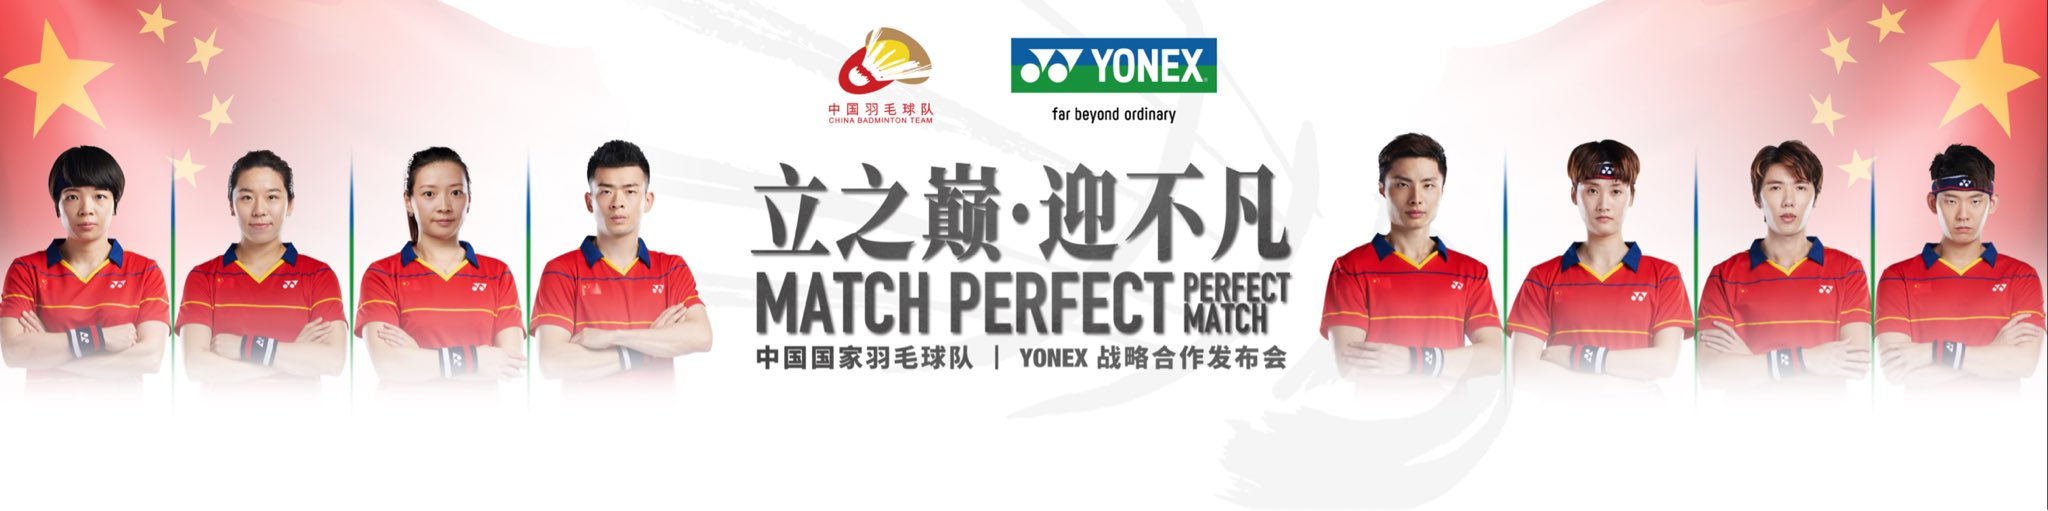 Yonex Badminton on X